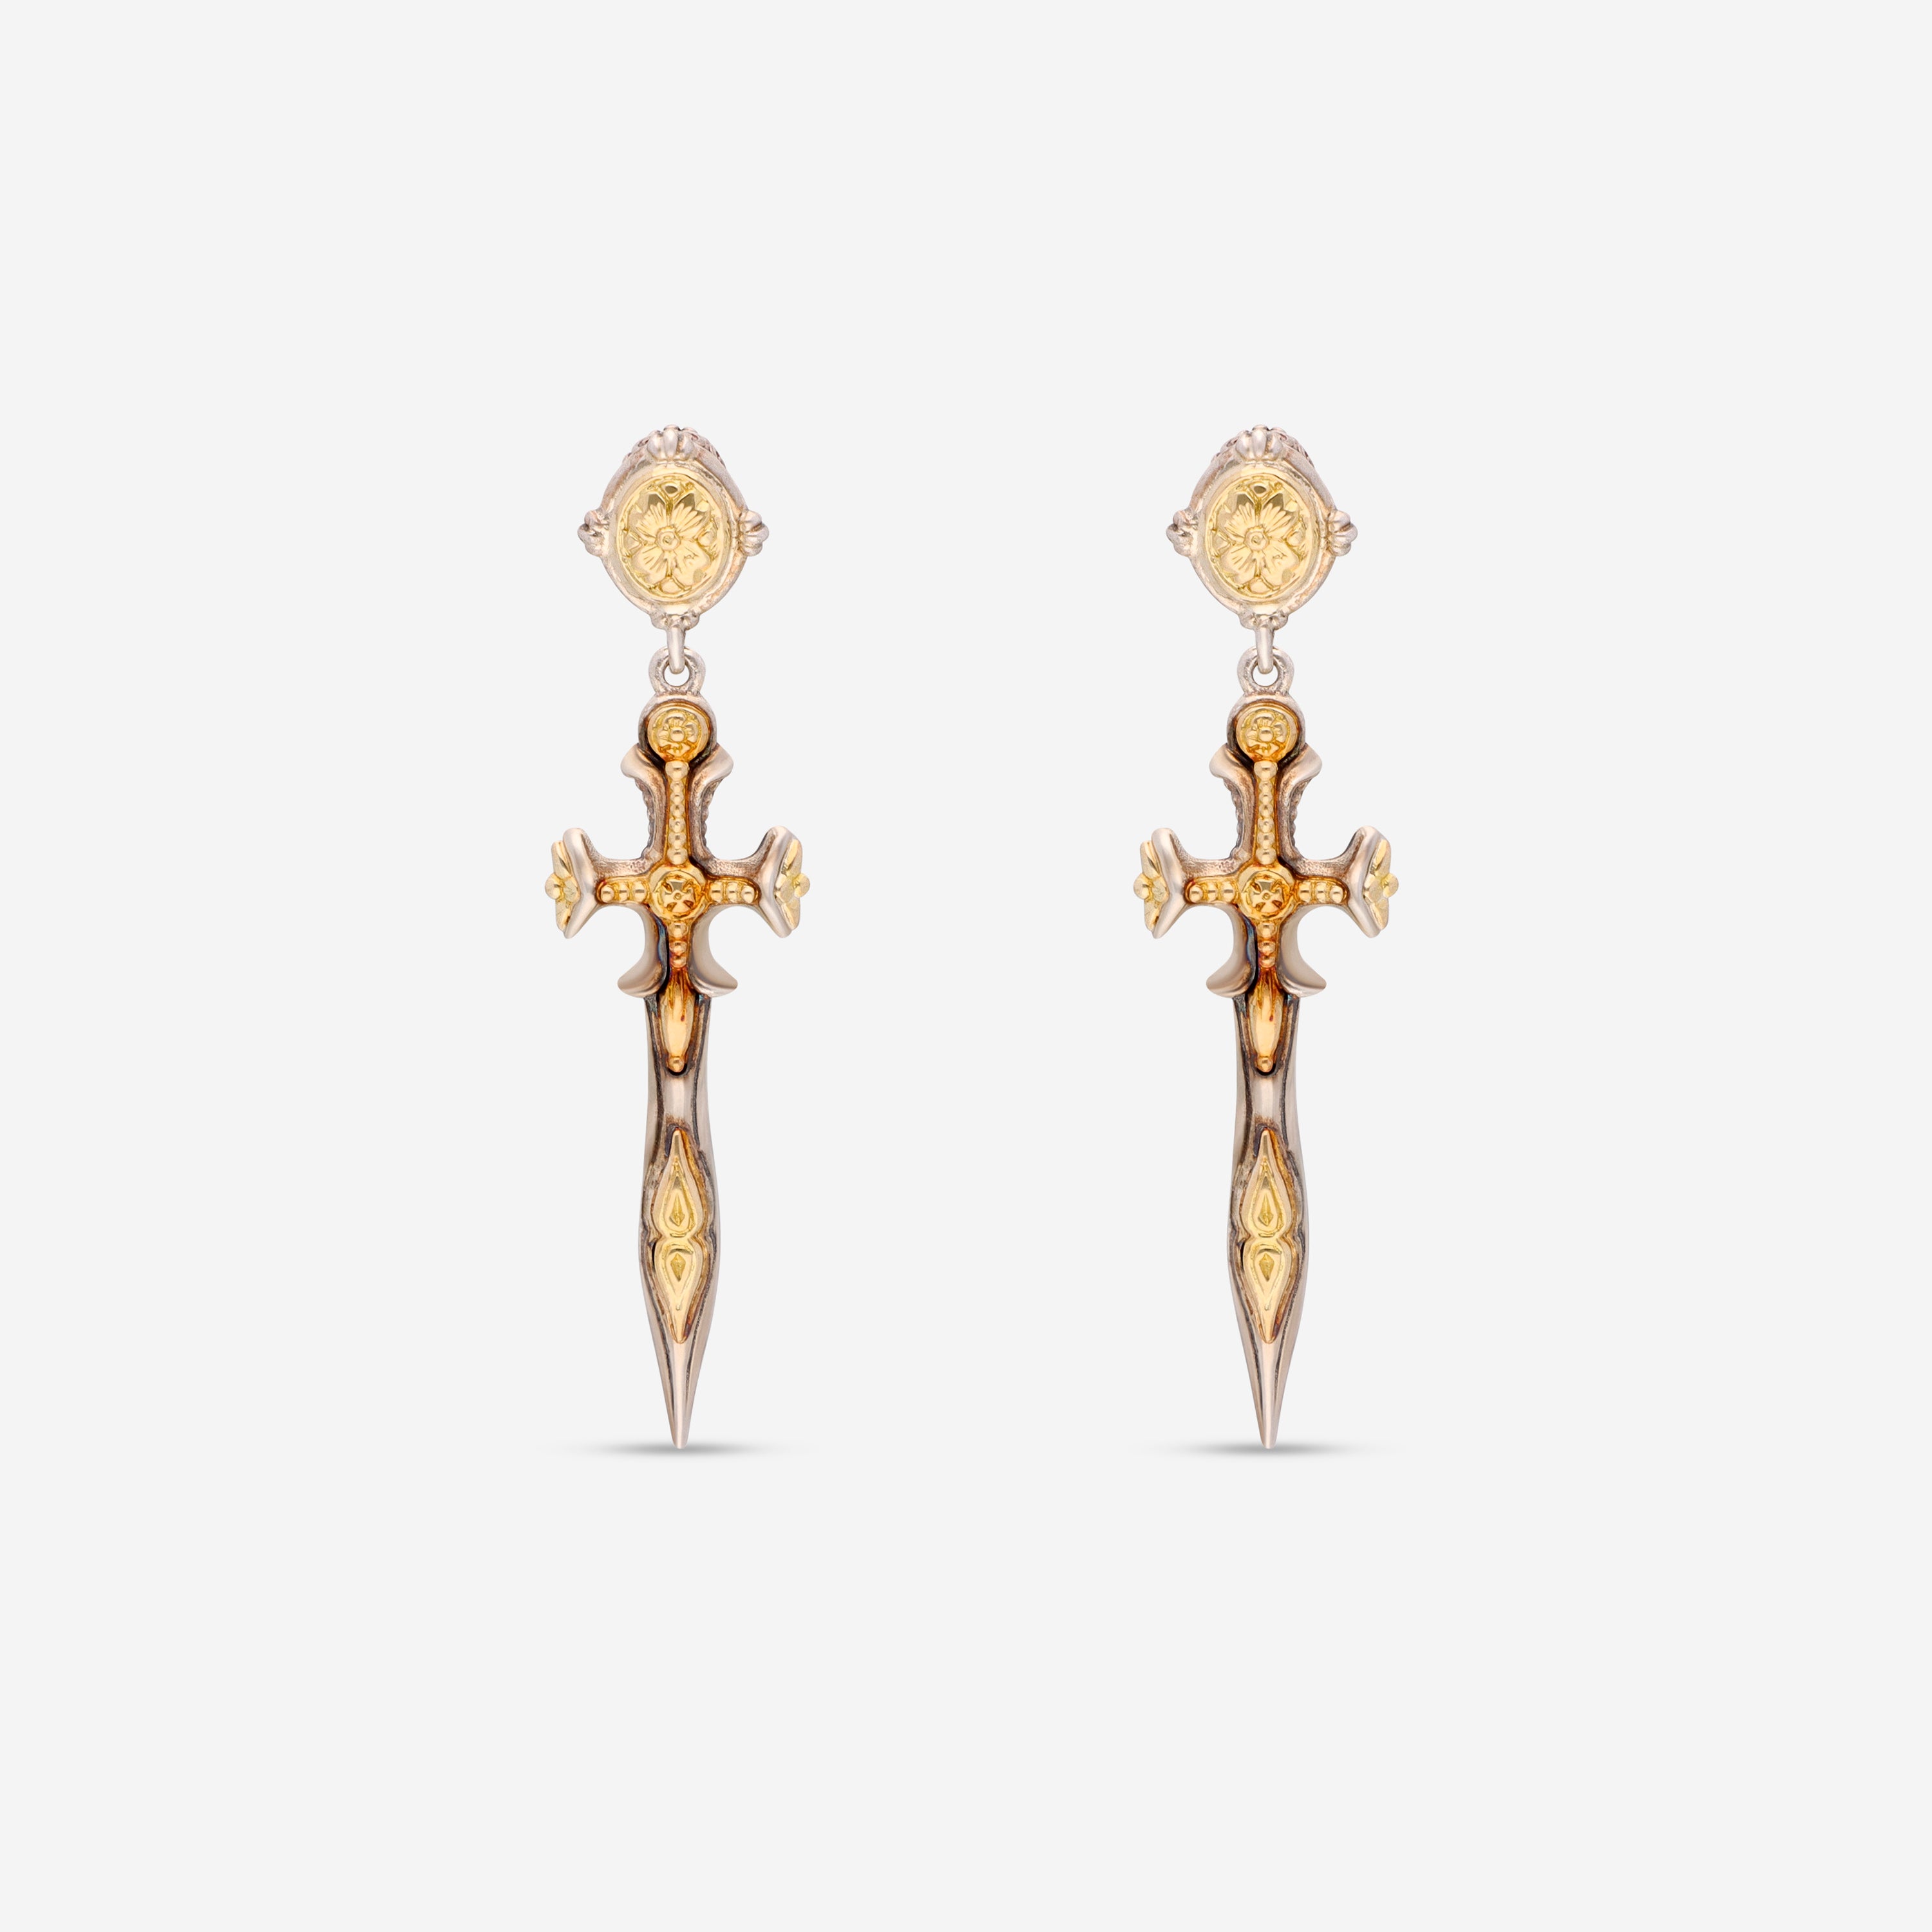 Konstantino Gaia Sterling Silver and 18K Yellow Gold Drop Earrings SKKJ621-130